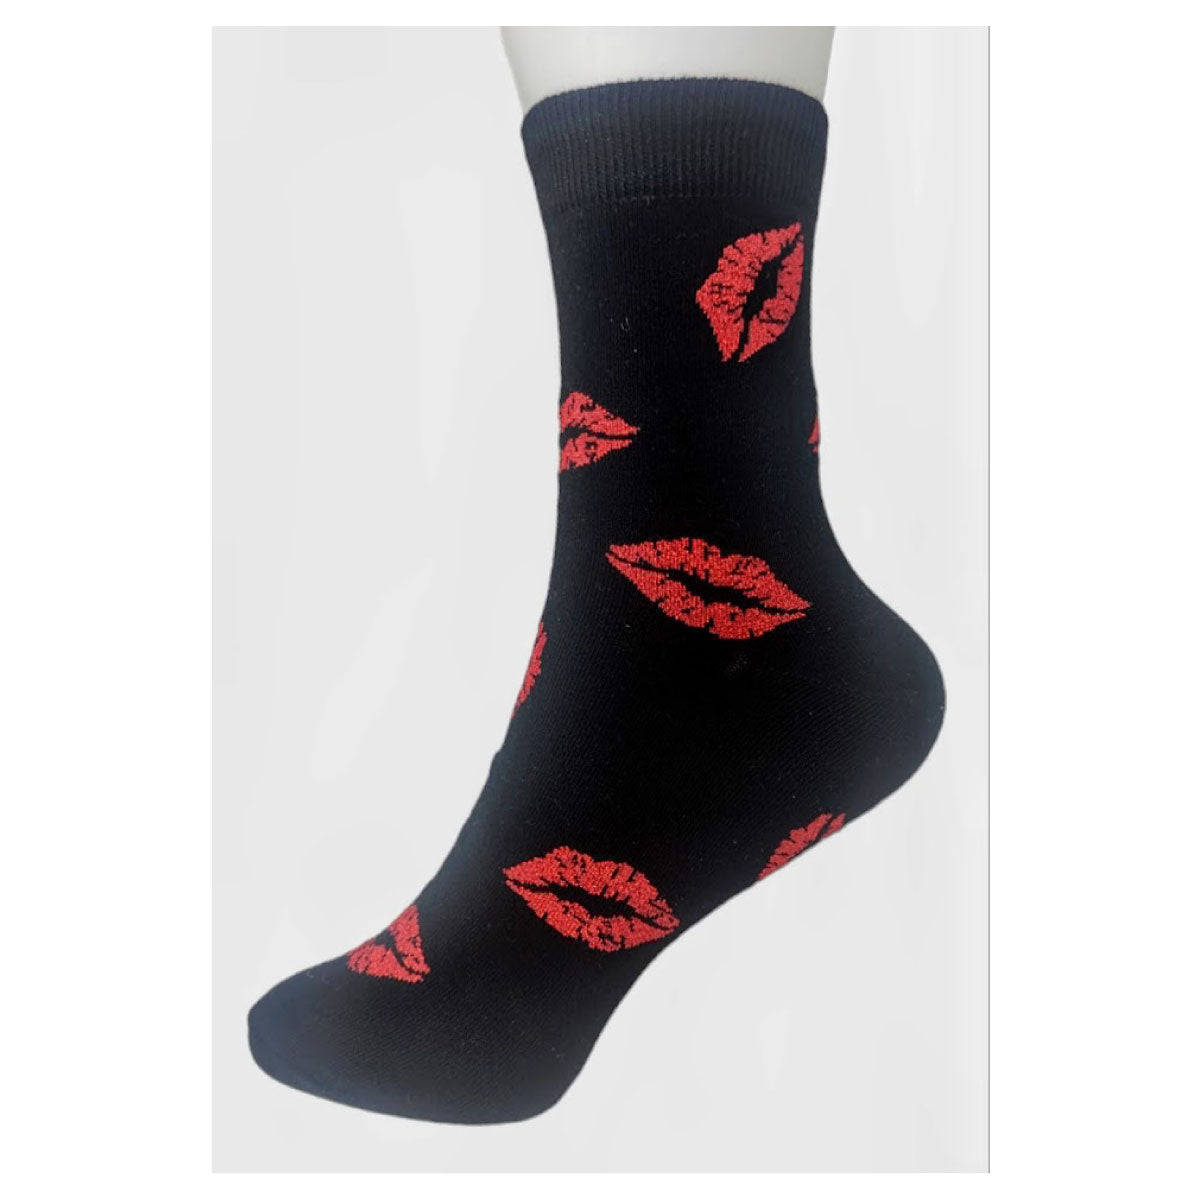 Shimmer Lips Half Crew Socks black | MILK MONEY milkmoney.co | women's accessories. cute accessories. trendy accessories. cute accessories for girls. ladies accessories. women's fashion accessories.